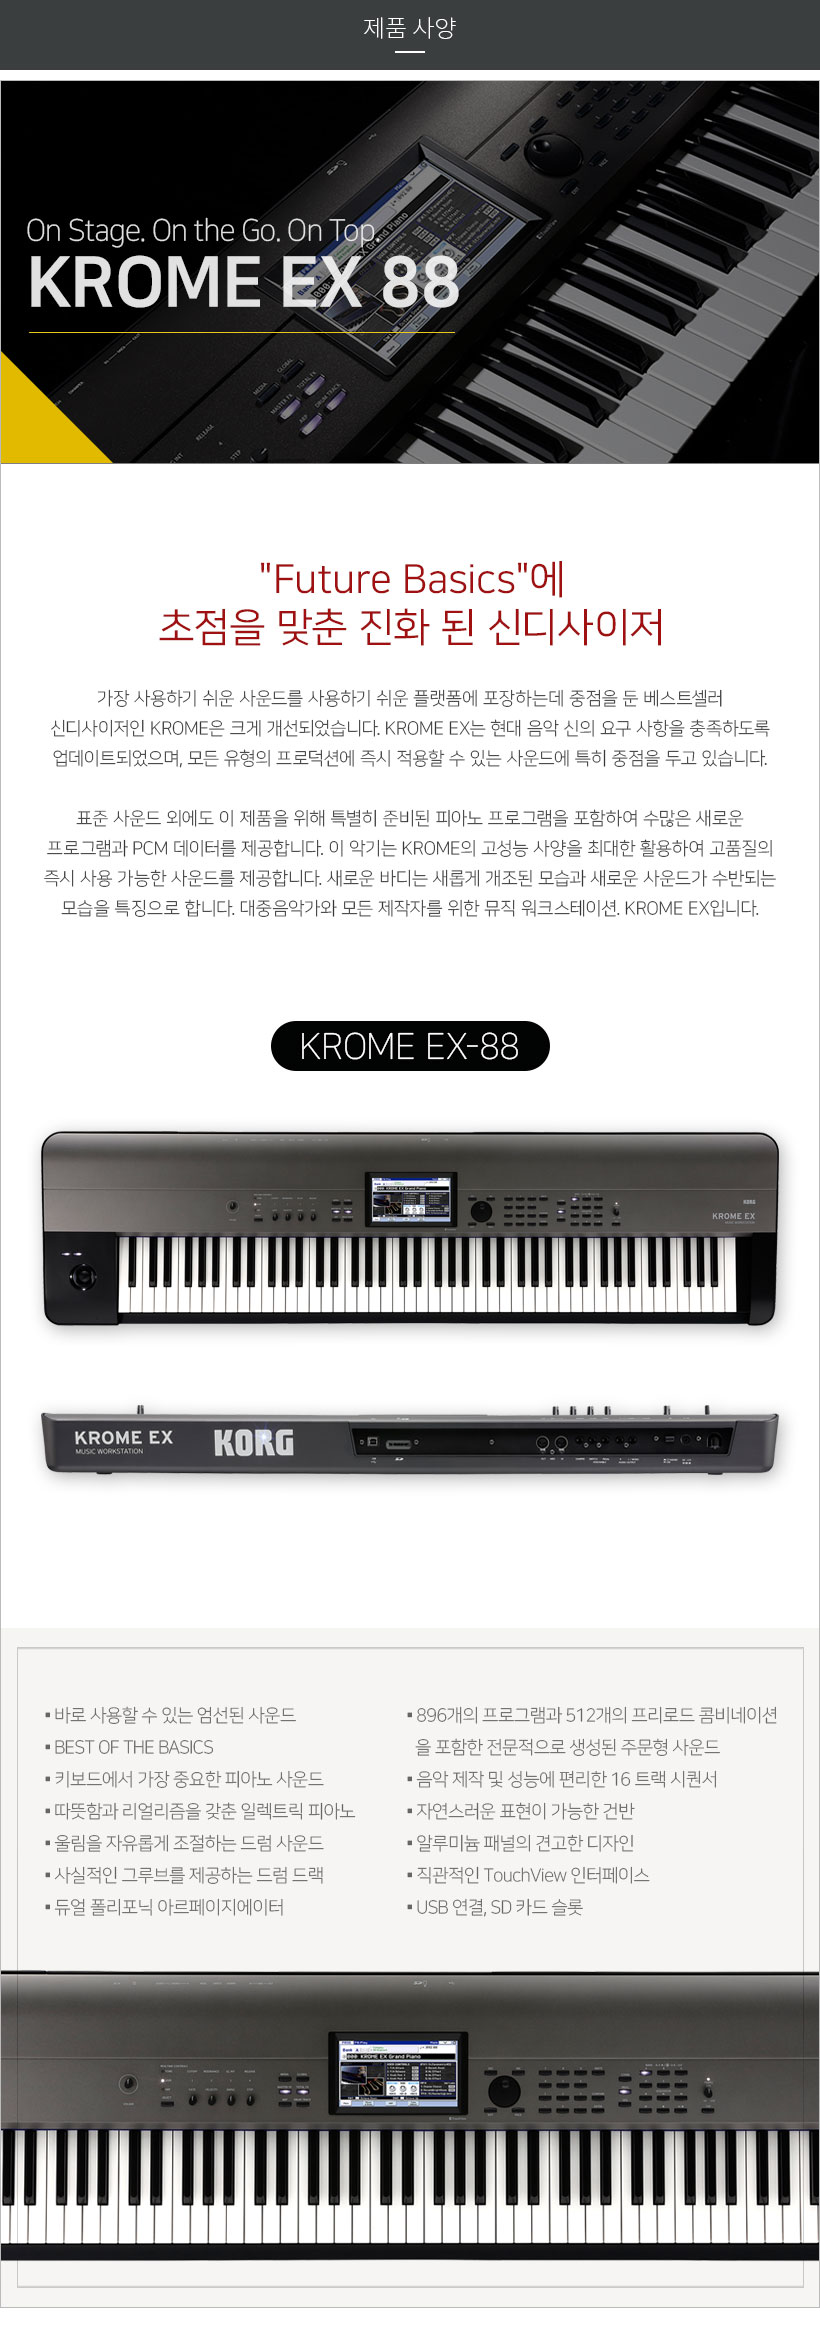 KROME EX88 제품 사양